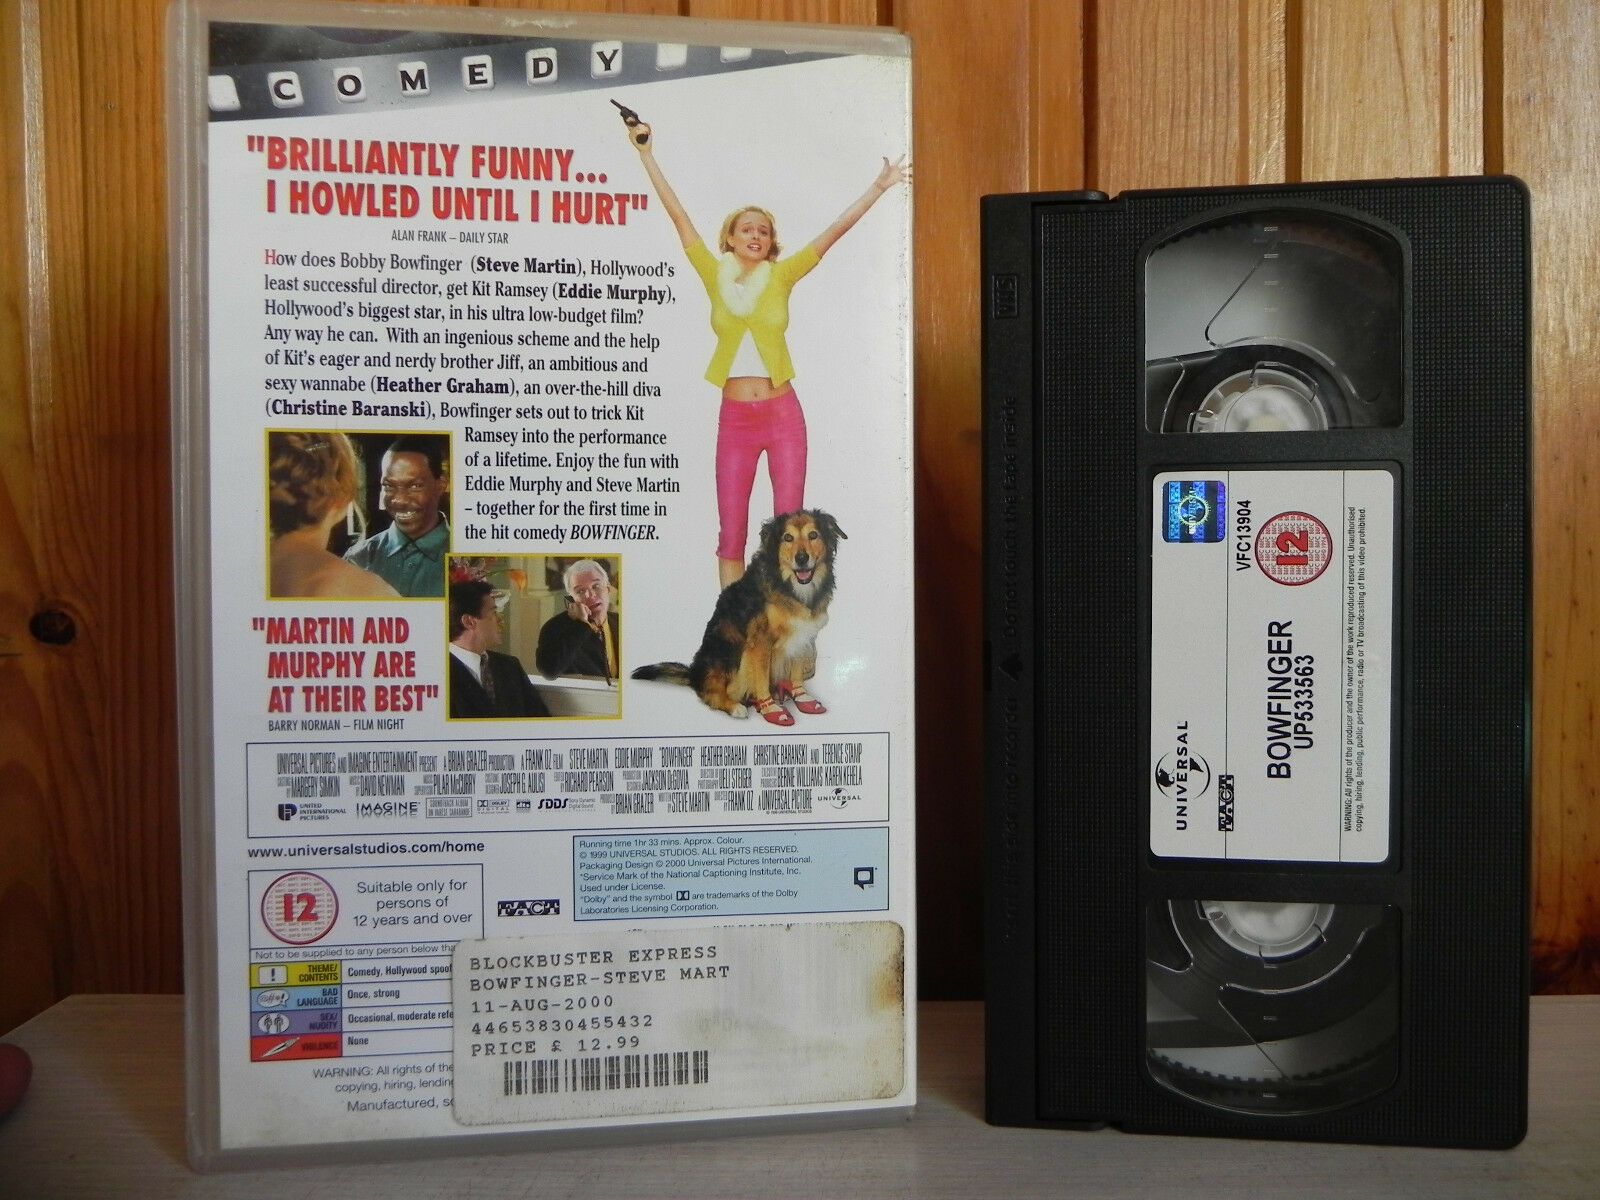 Bowfinger - Universal - Comedy - Steve Martin - Eddie Murphy - Pal VHS-